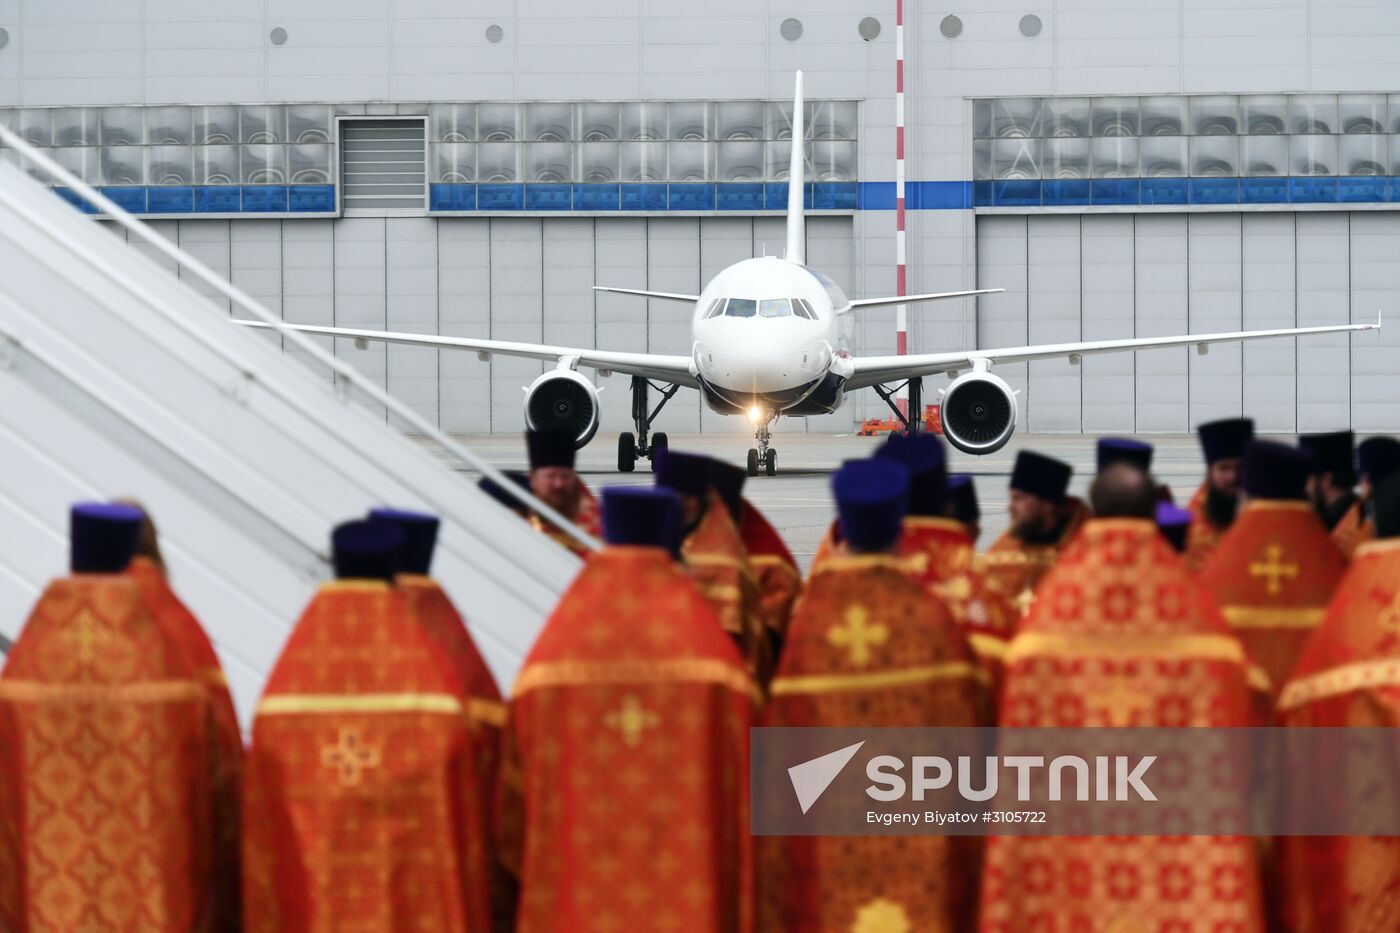 Saint Nicholas relics arrive in Moscow